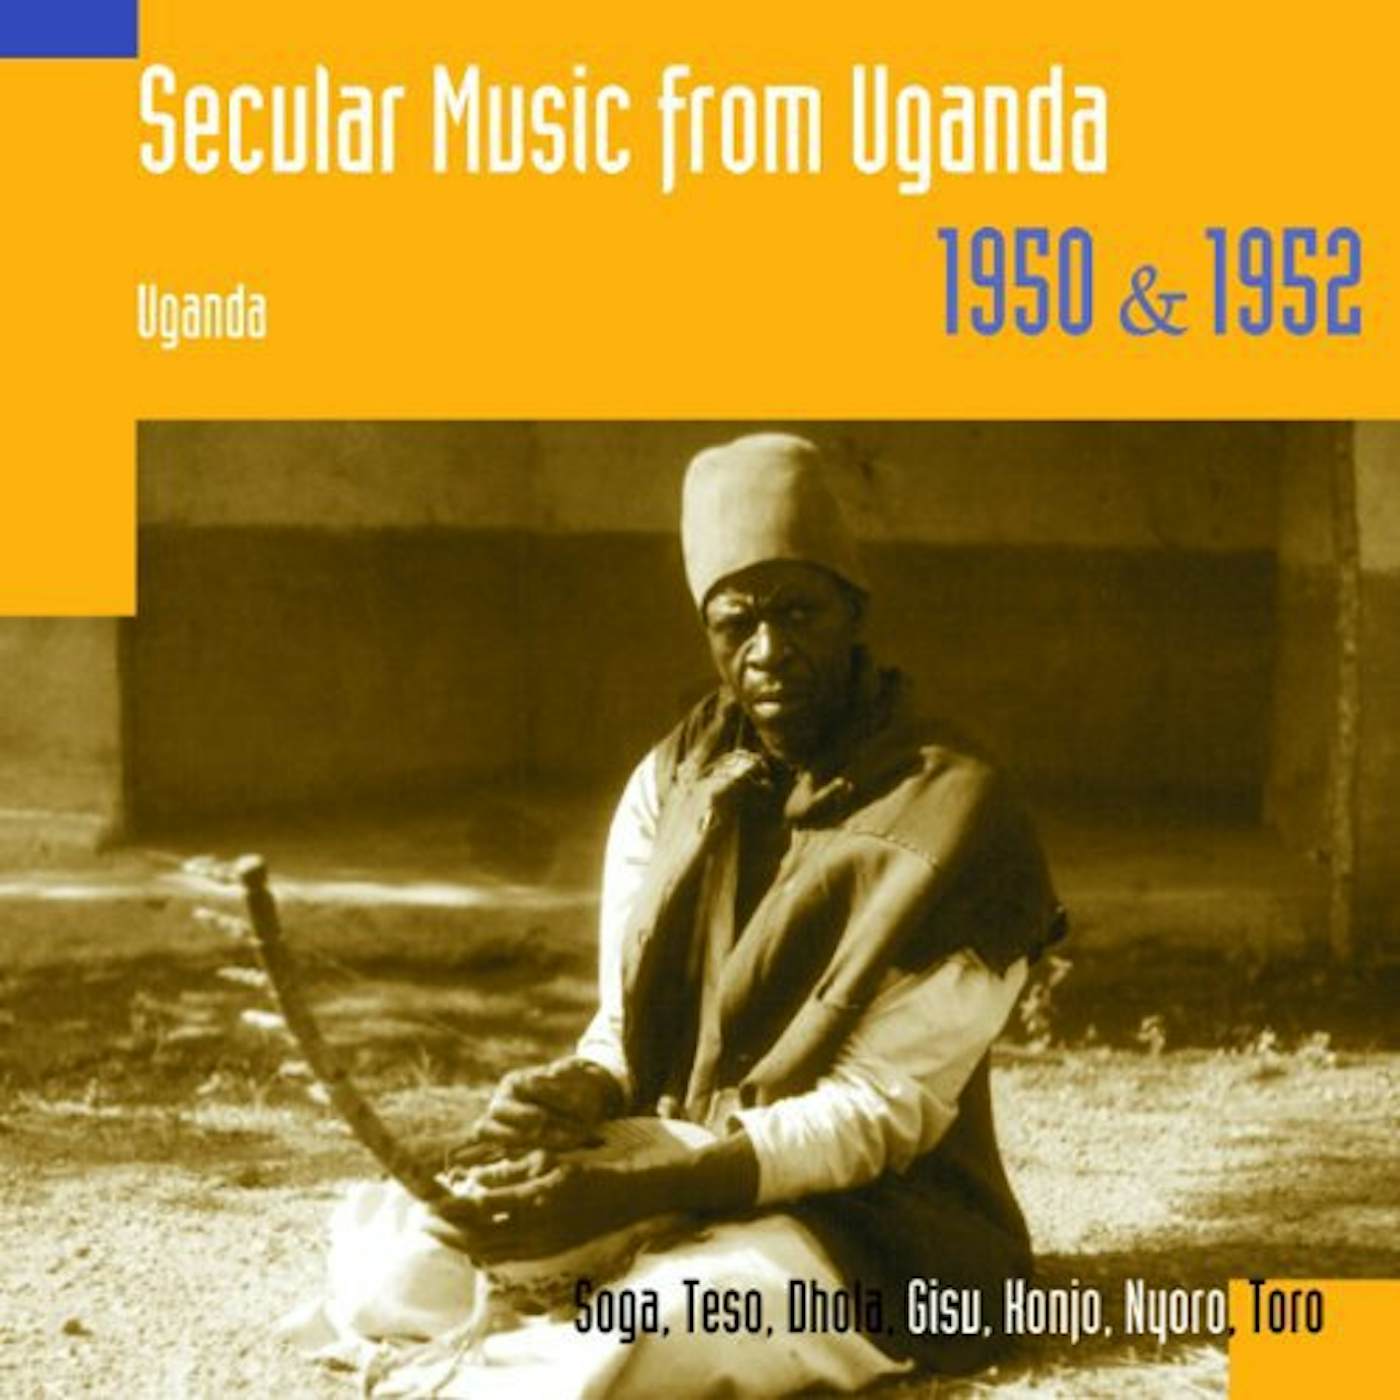 Hugh Tracey SECULAR MUSIC FROM UGANDA 1950 & 1952 CD